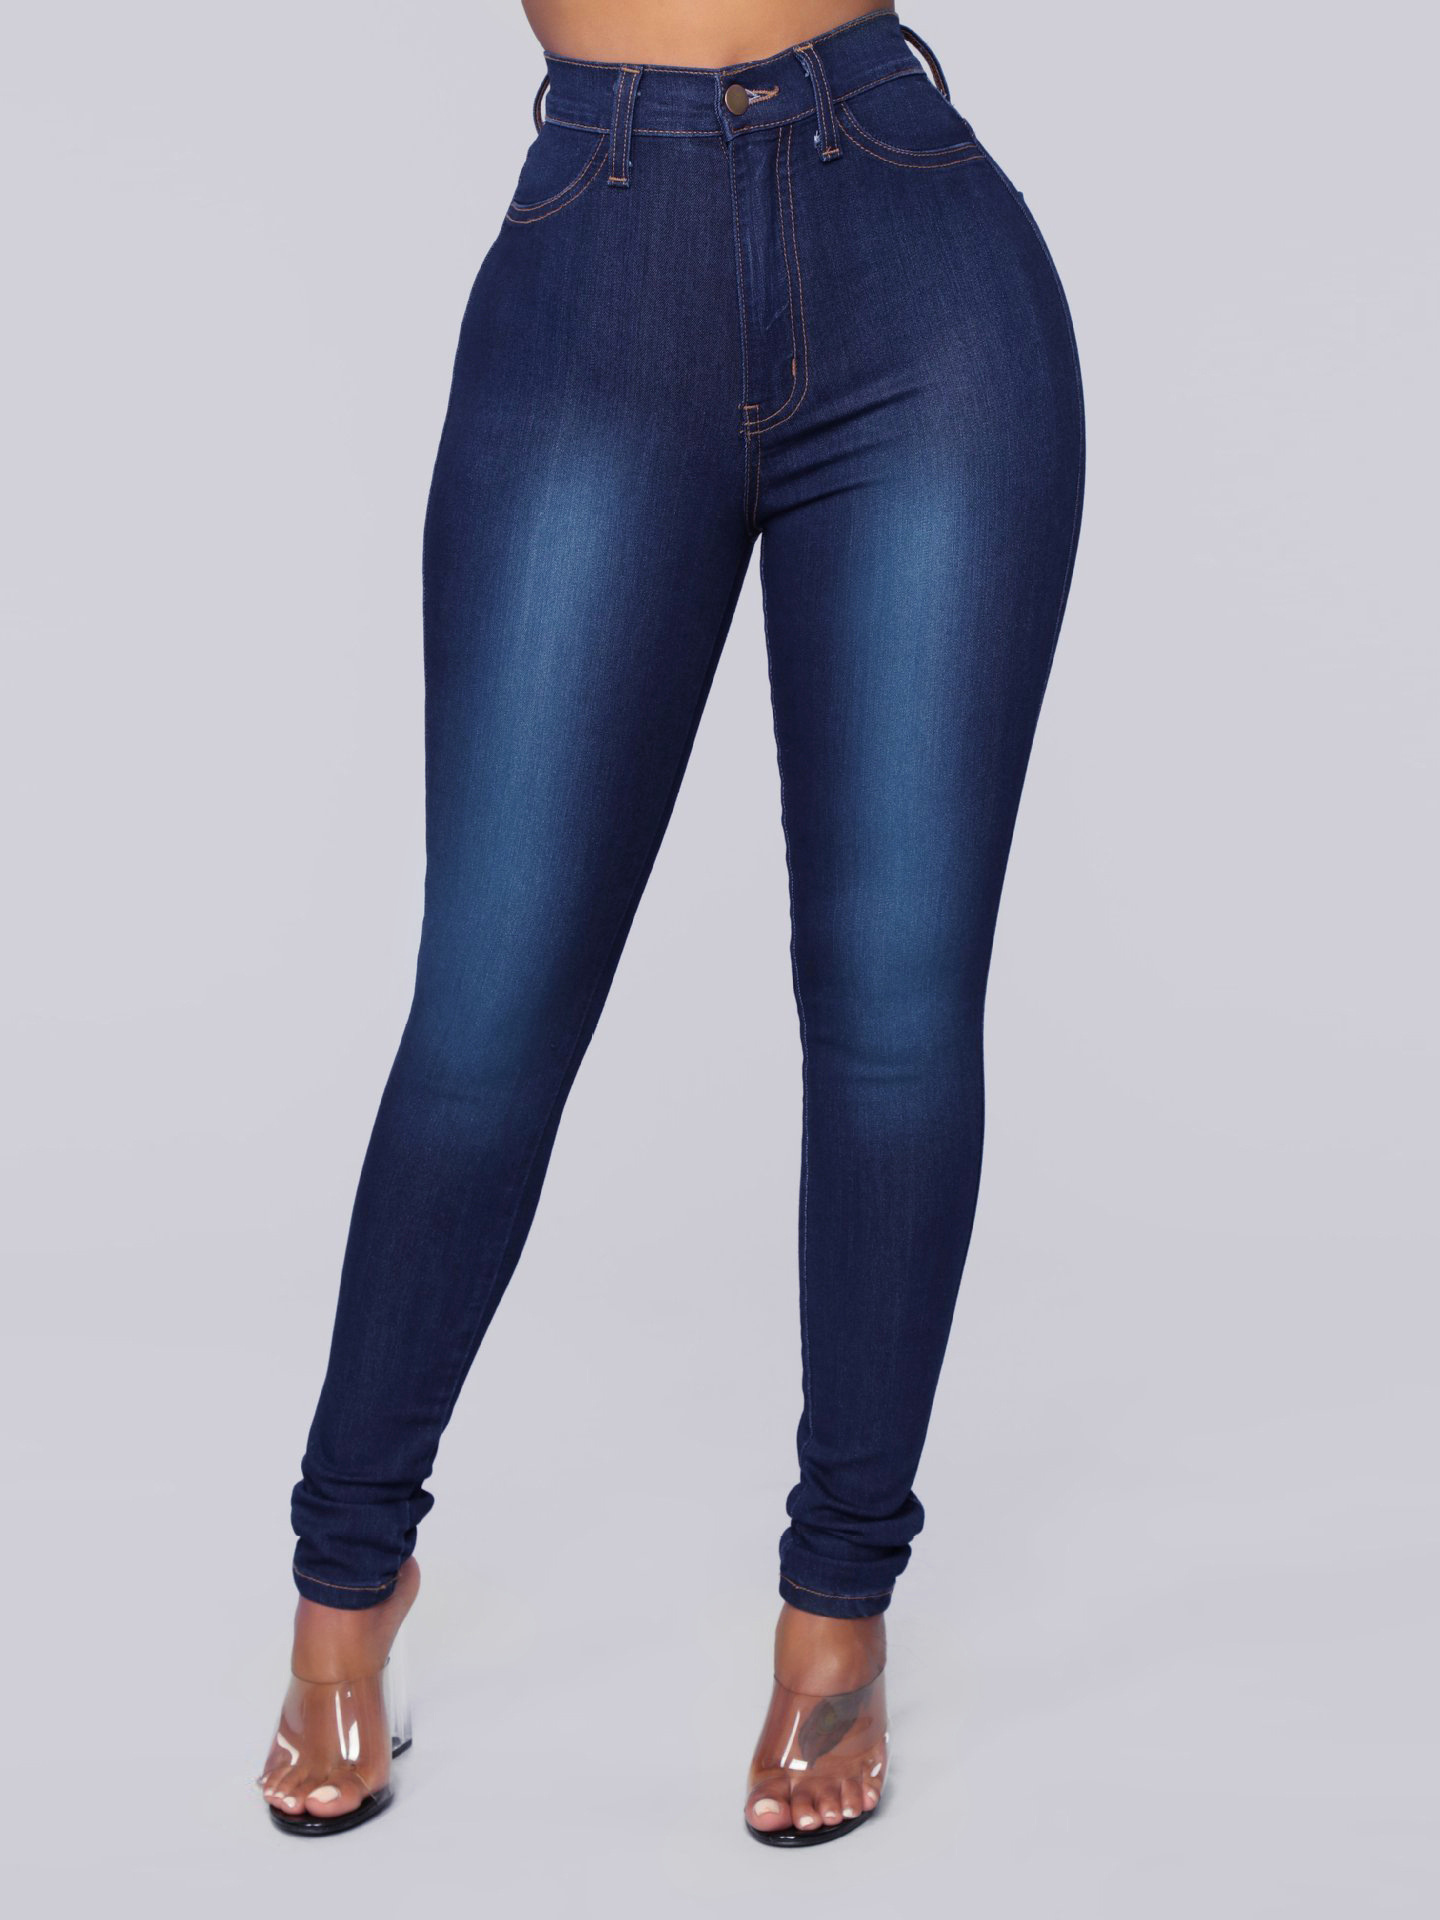 Best Wholesale Solid Color Women Skinny Jeans